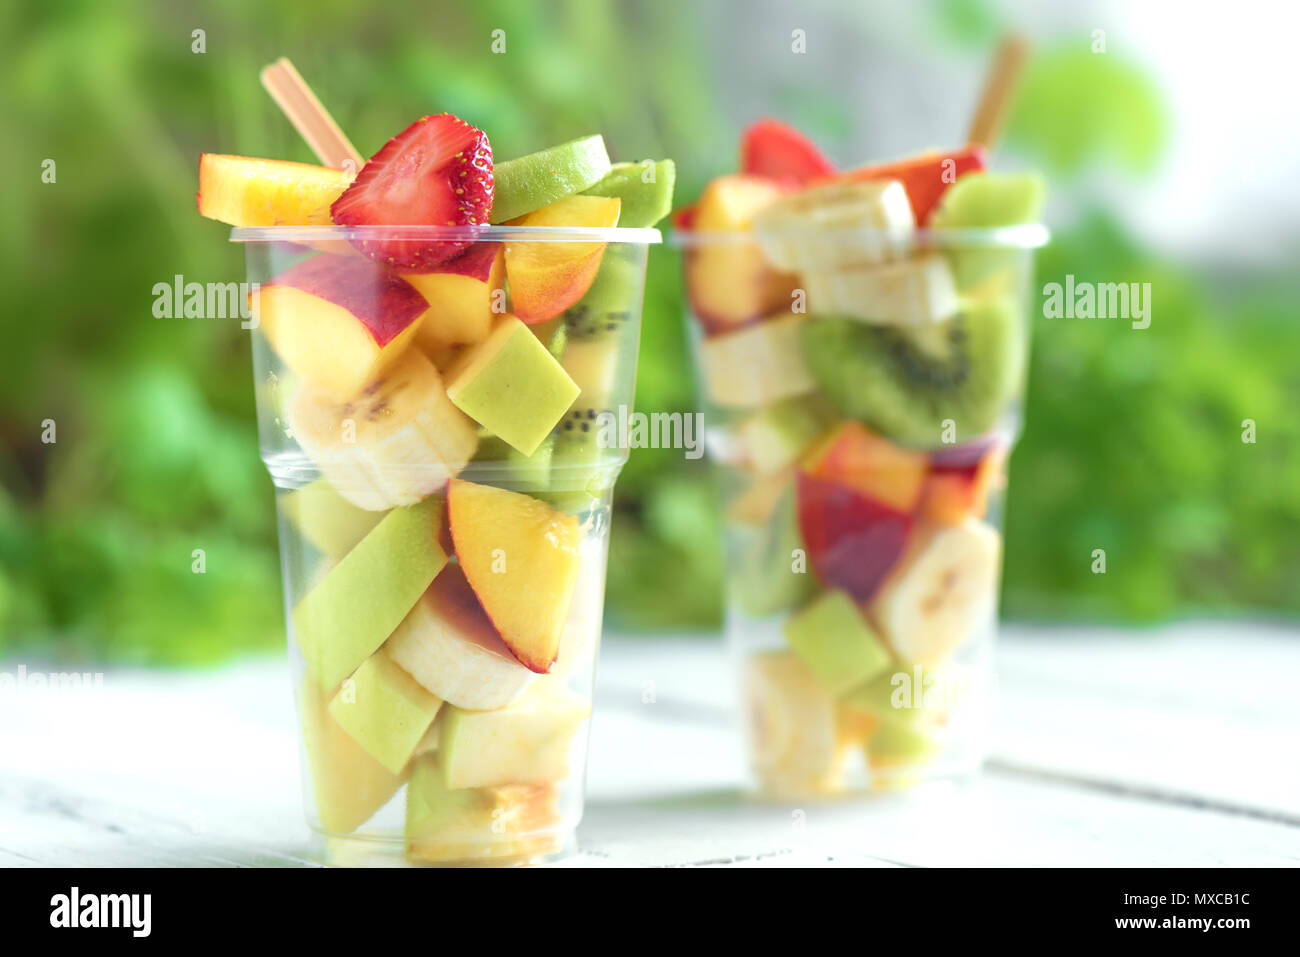 https://c8.alamy.com/comp/MXCB1C/fruit-salad-in-plastic-cups-takeaway-sliced-organic-fruits-and-berries-healthy-snack-to-go-copy-space-MXCB1C.jpg